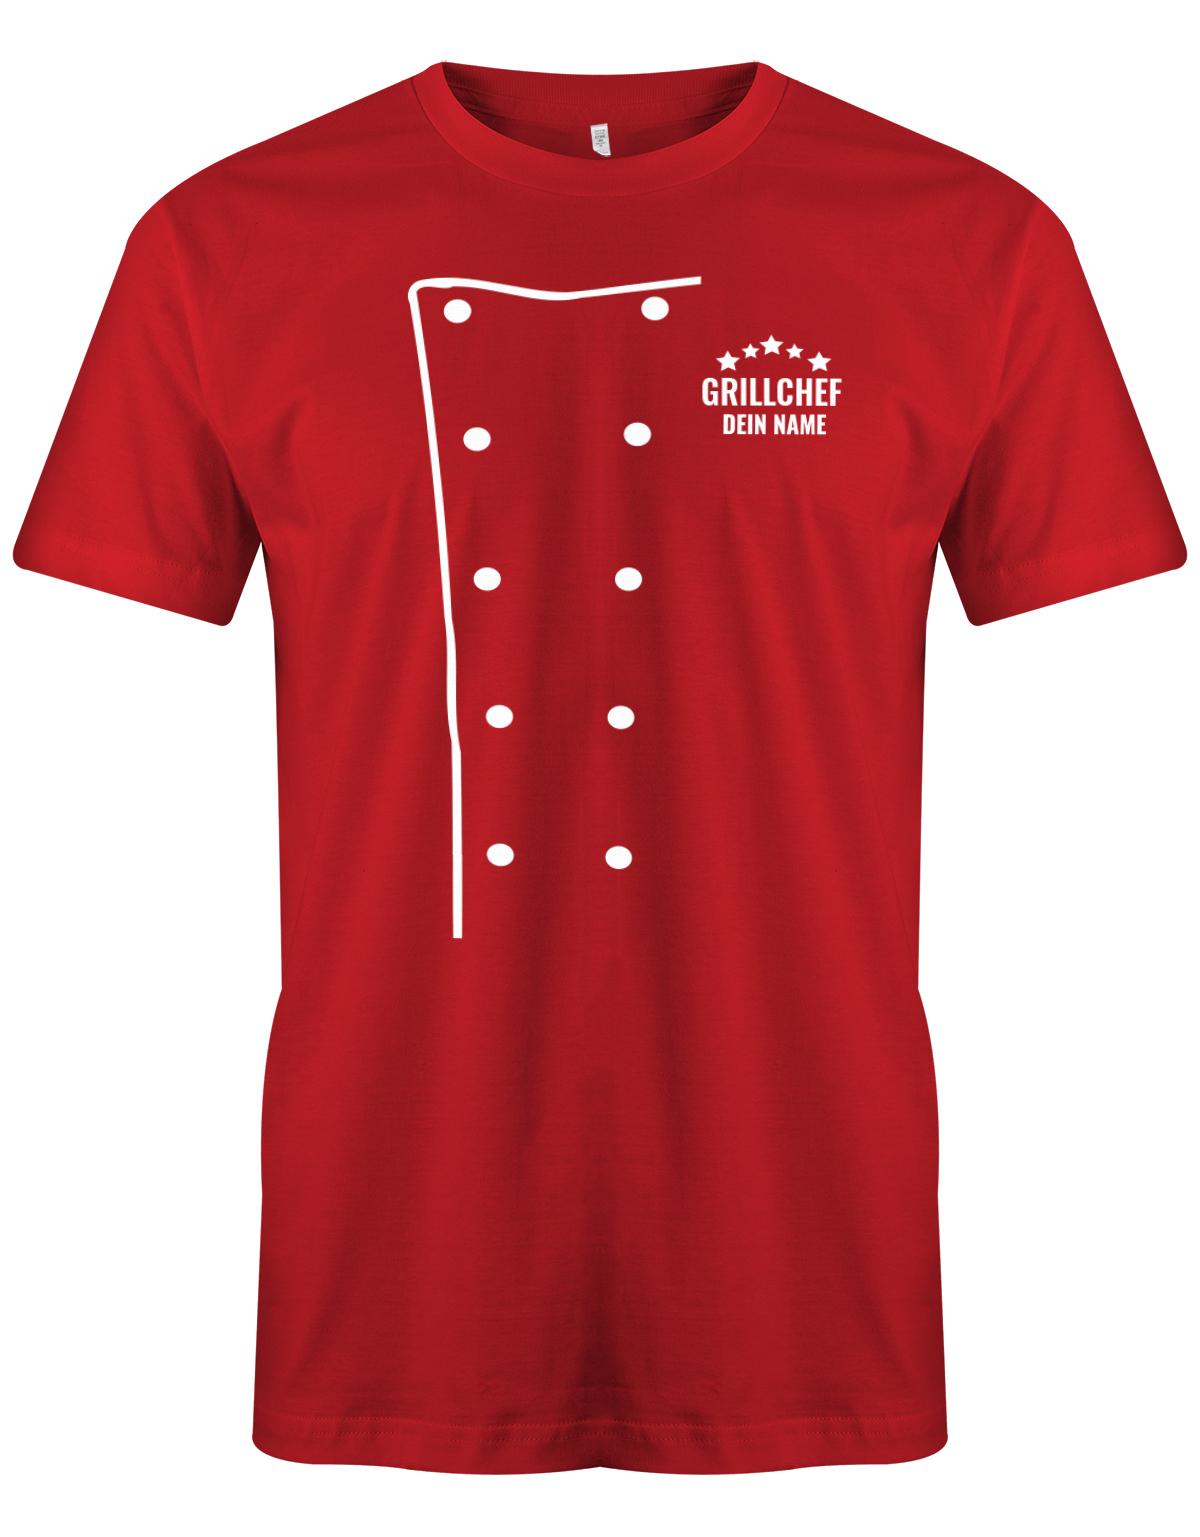 Grillchef-Wunschname-Herren-Shirt-Rot